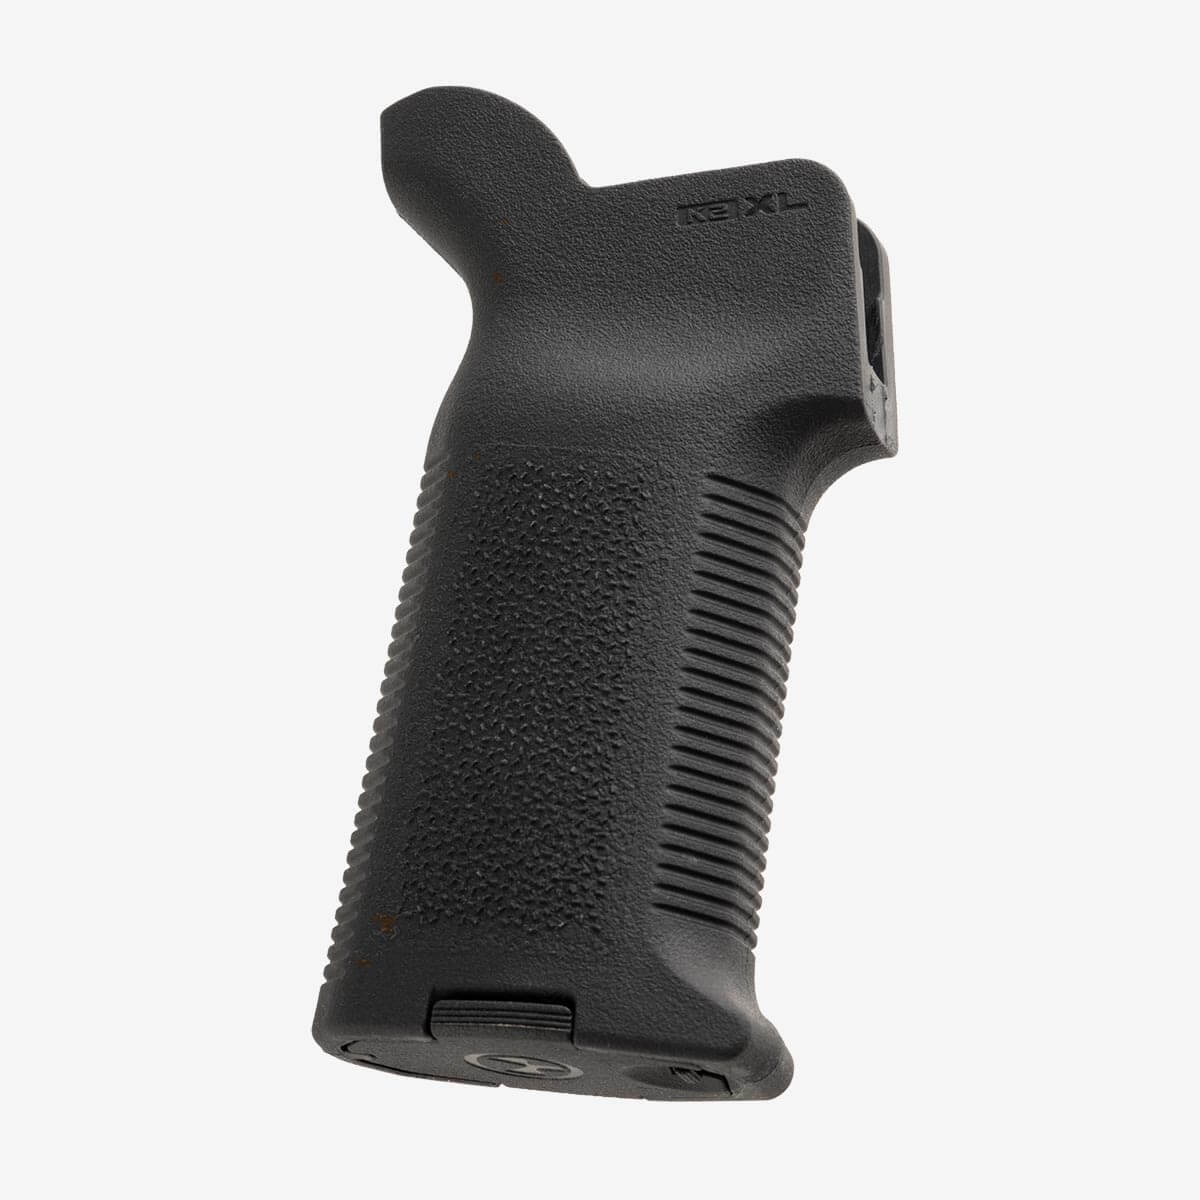 MOE® K2-XL Grip – AR15/M4